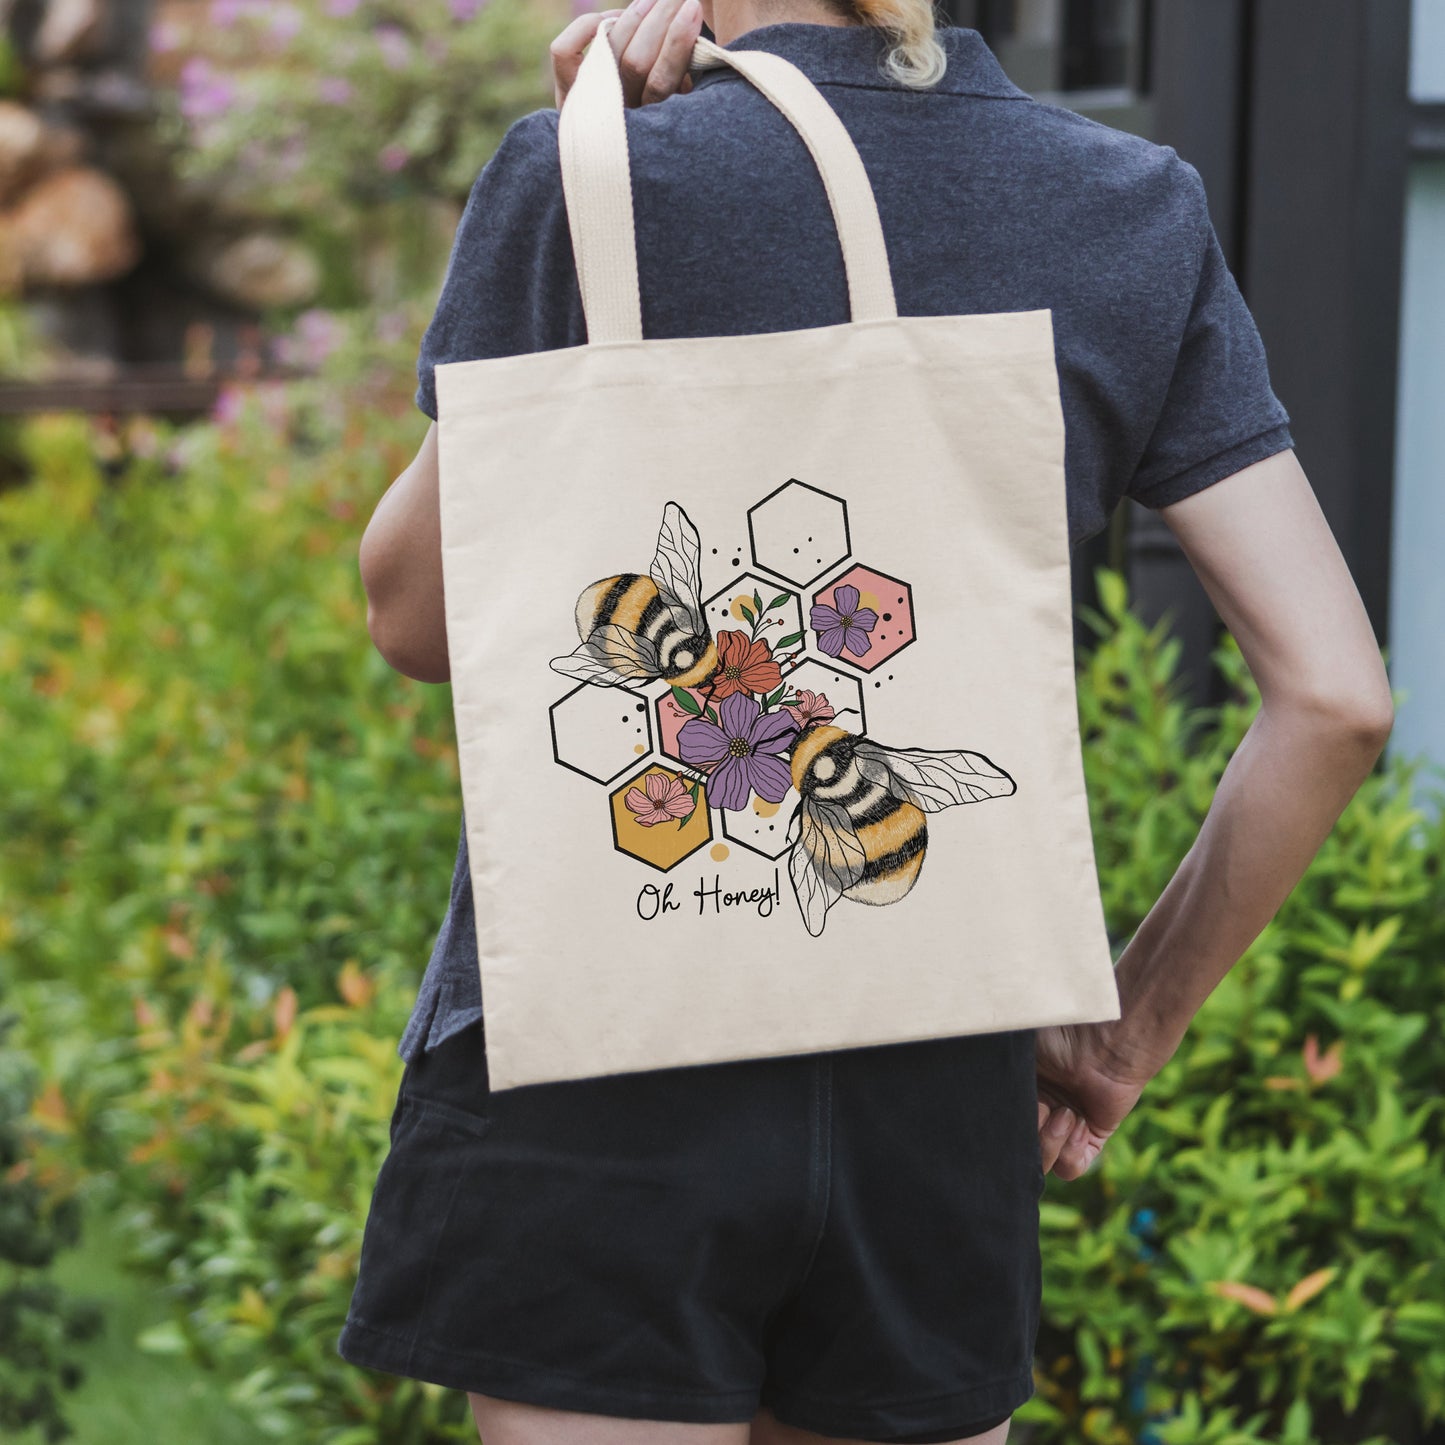 Oh Honey Bees Tote Bag